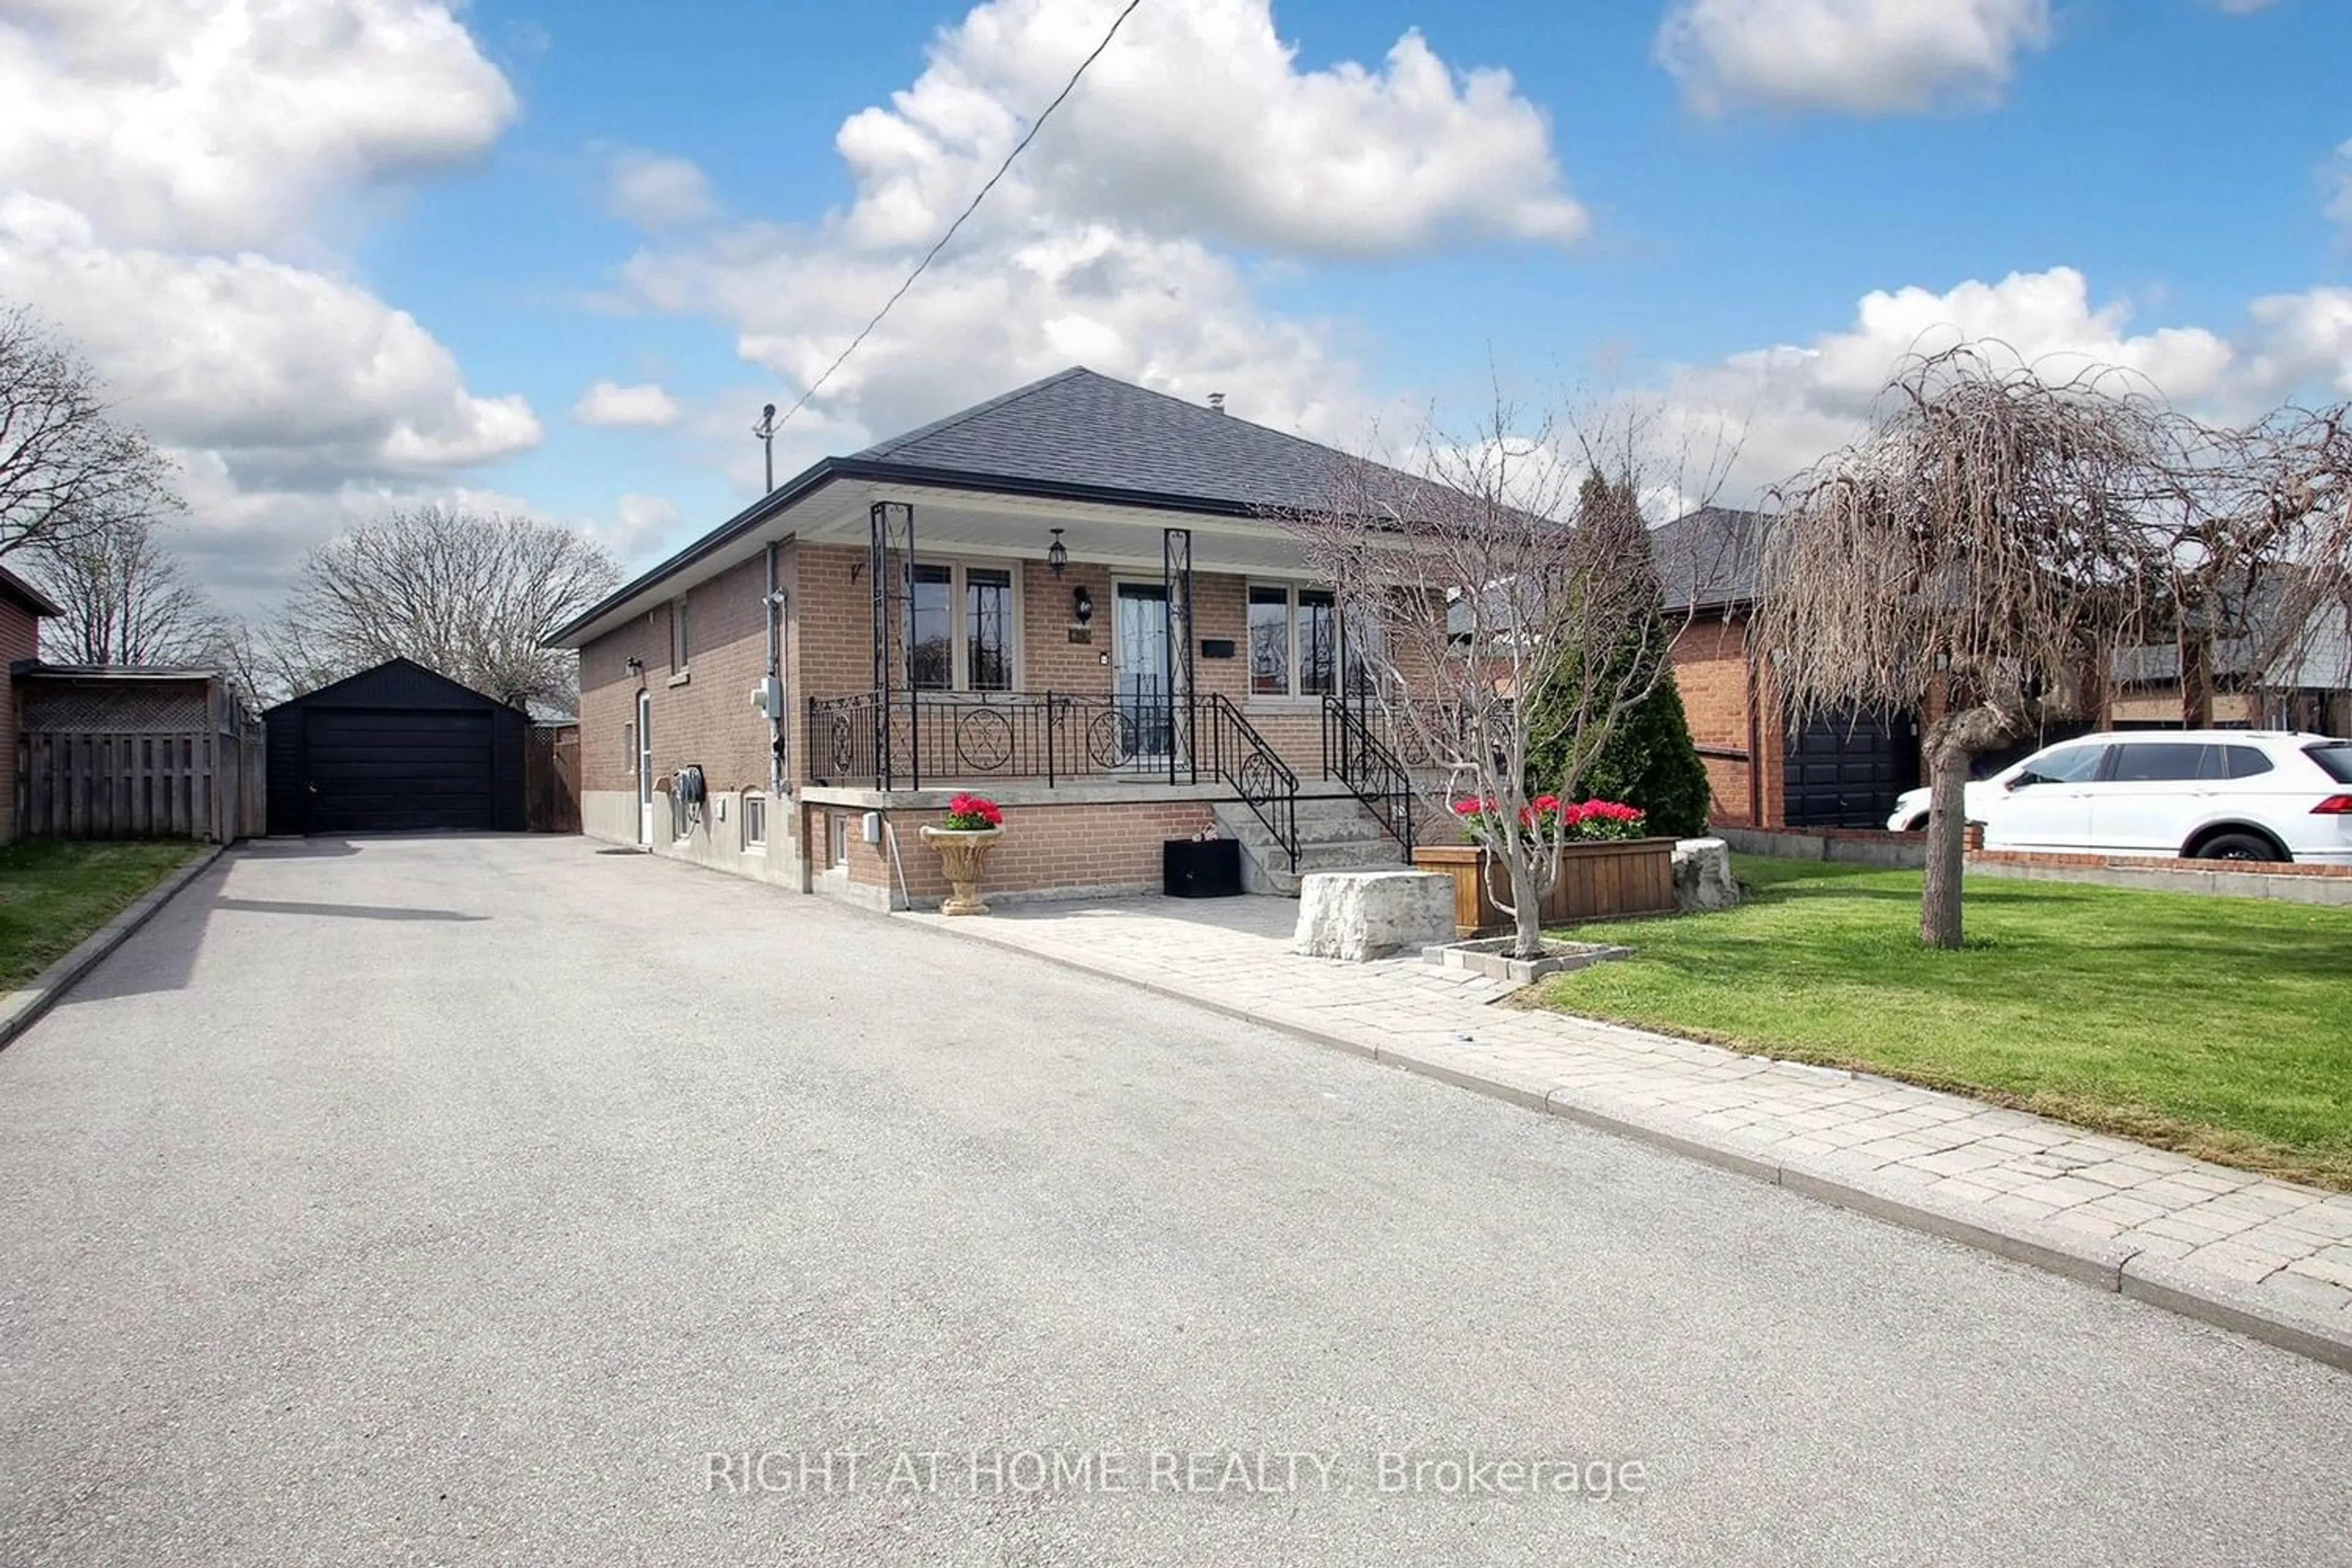 Street view for 39 Bunnel Cres, Toronto Ontario M3M 2B8